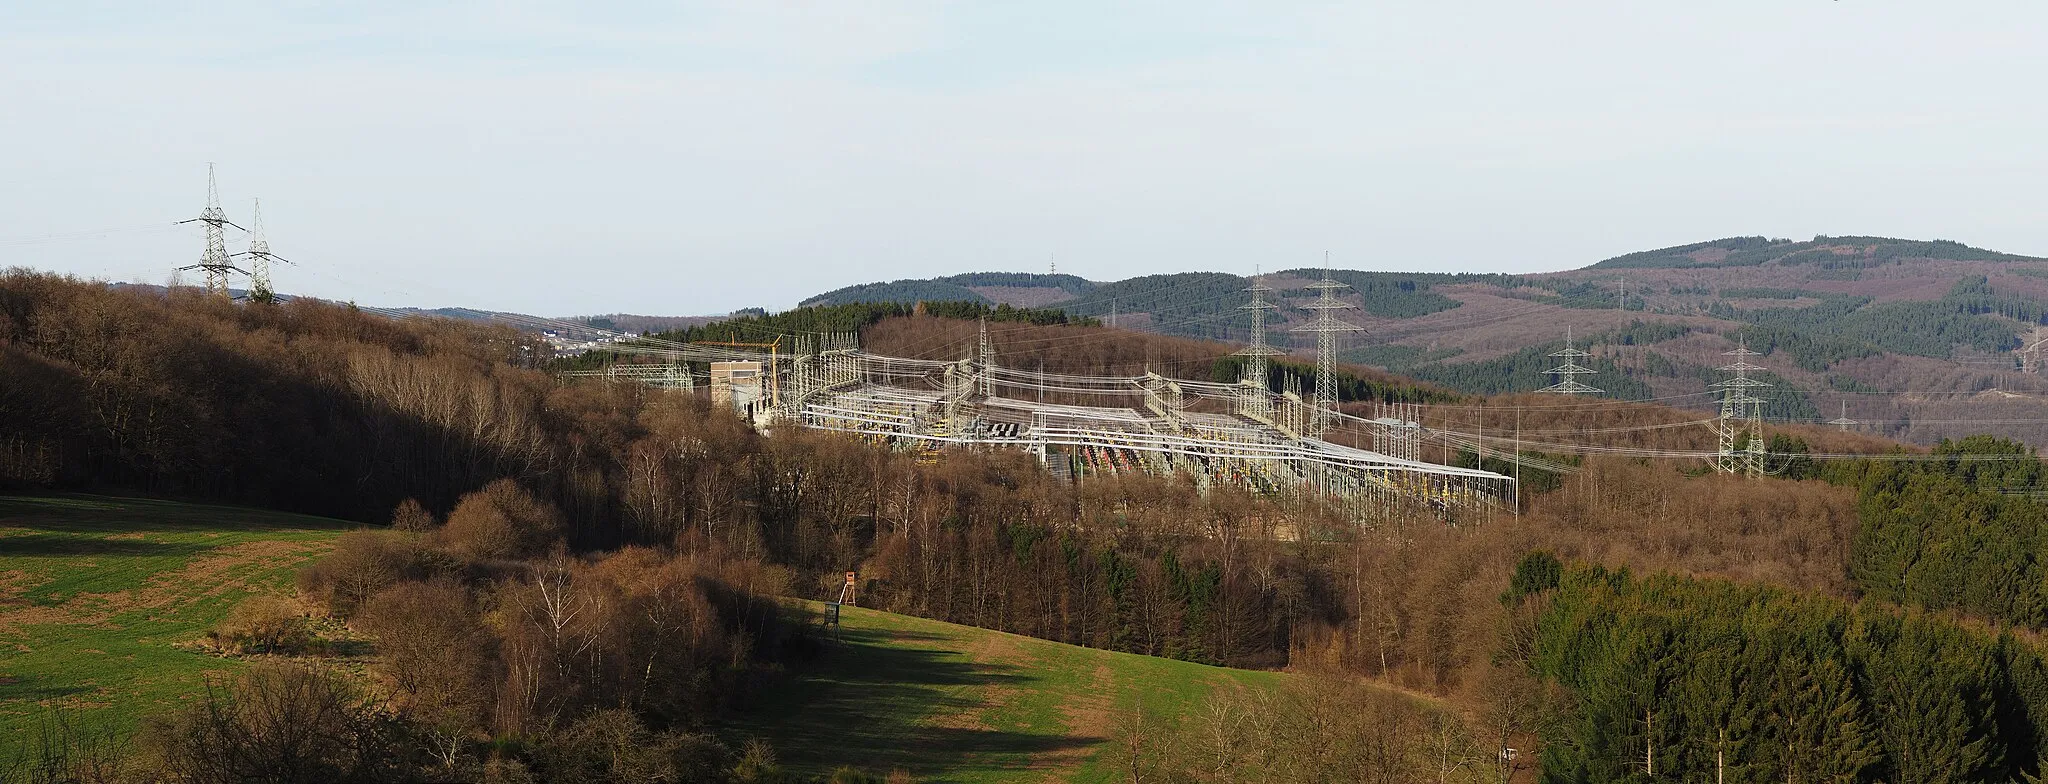 Photo showing: Dauersberg power substation